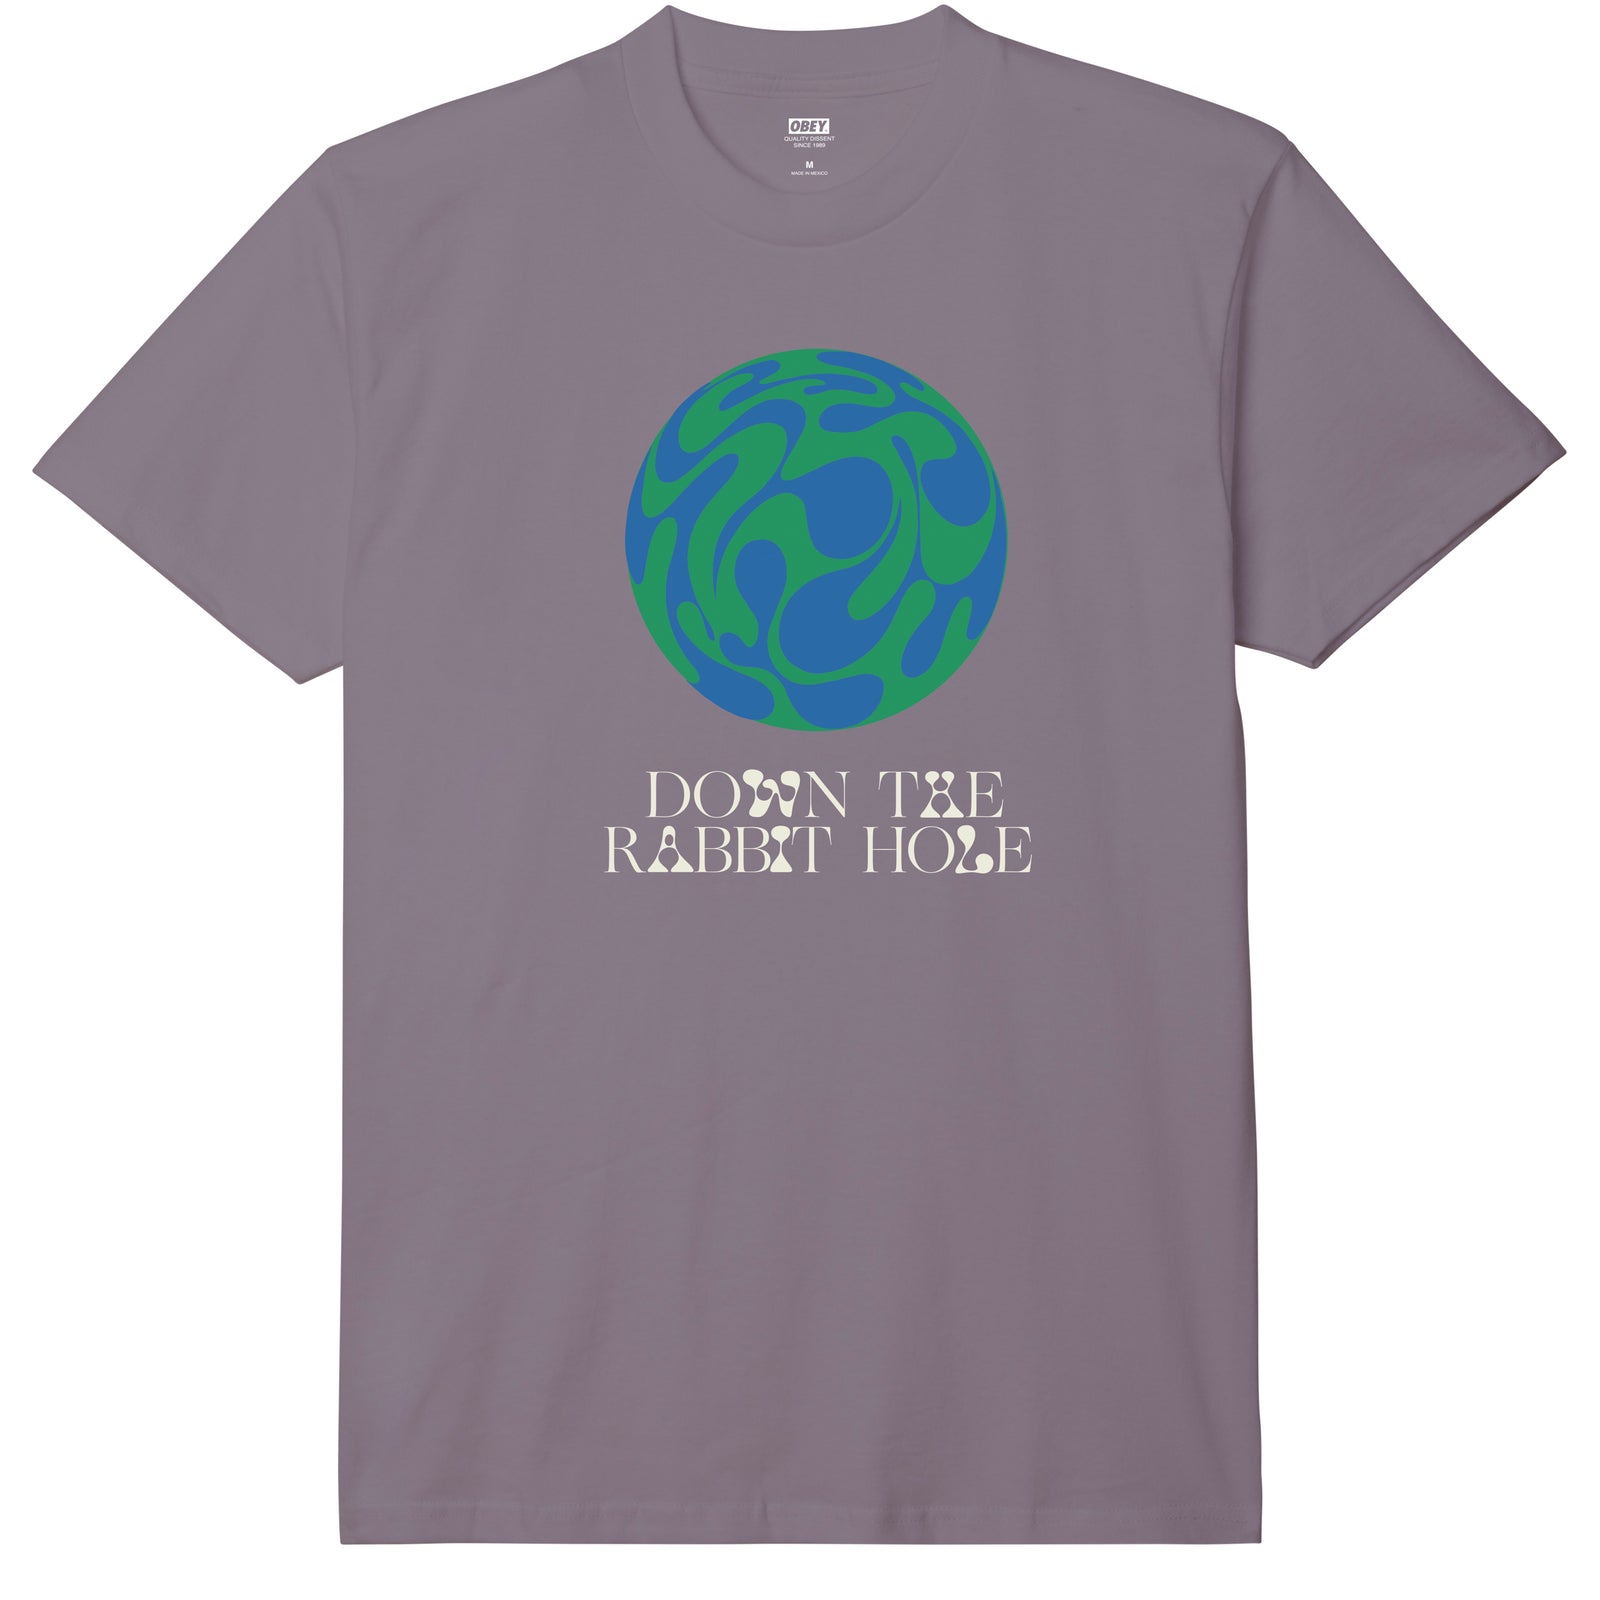 LV Globe T-Shirt - Women - Ready-to-Wear